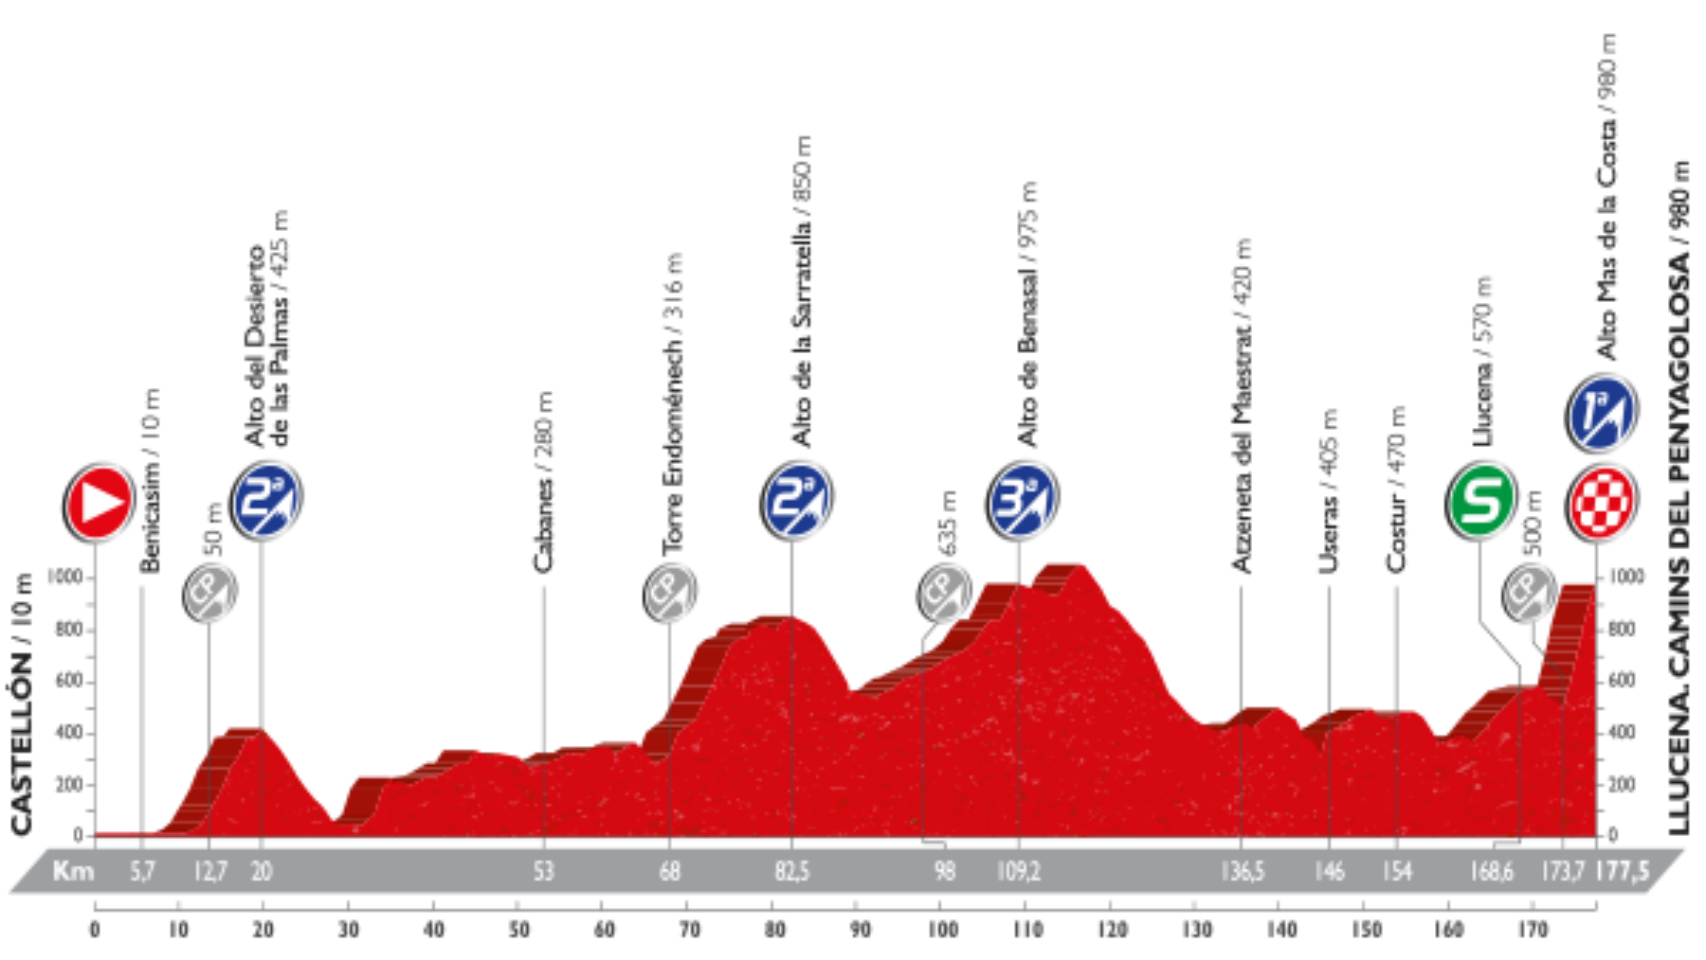 Perfil de la decimoséptima etapa de la Vuelta a España.